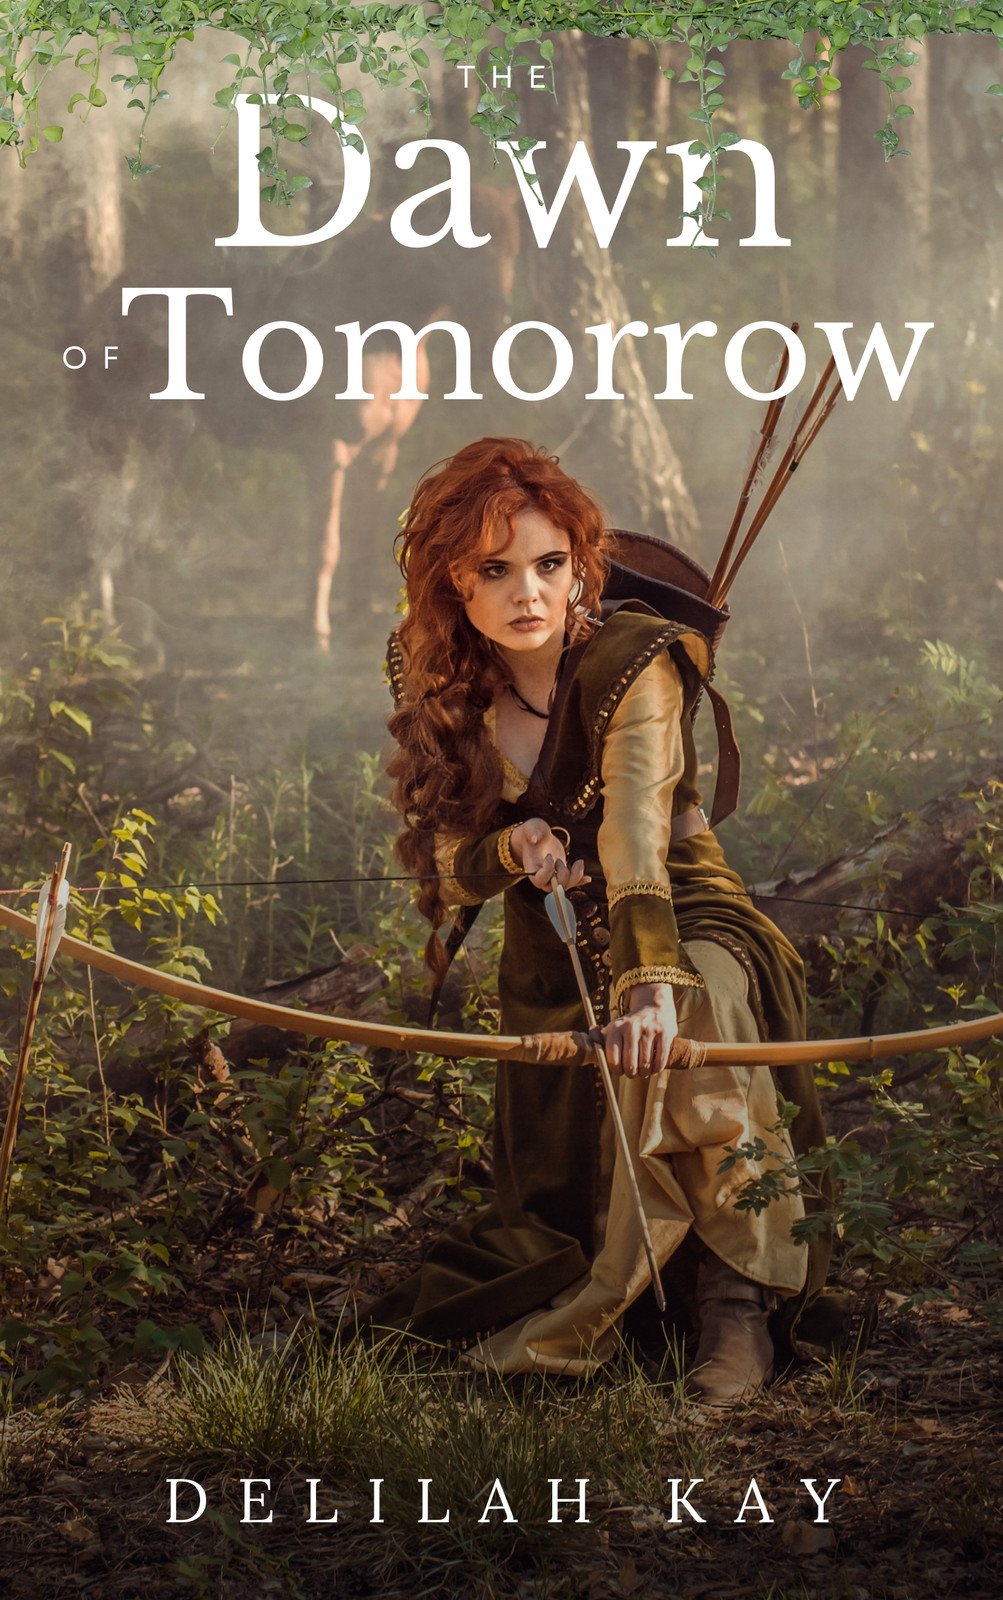 Archer Woman Fantasy Romance Fiction Book Cover